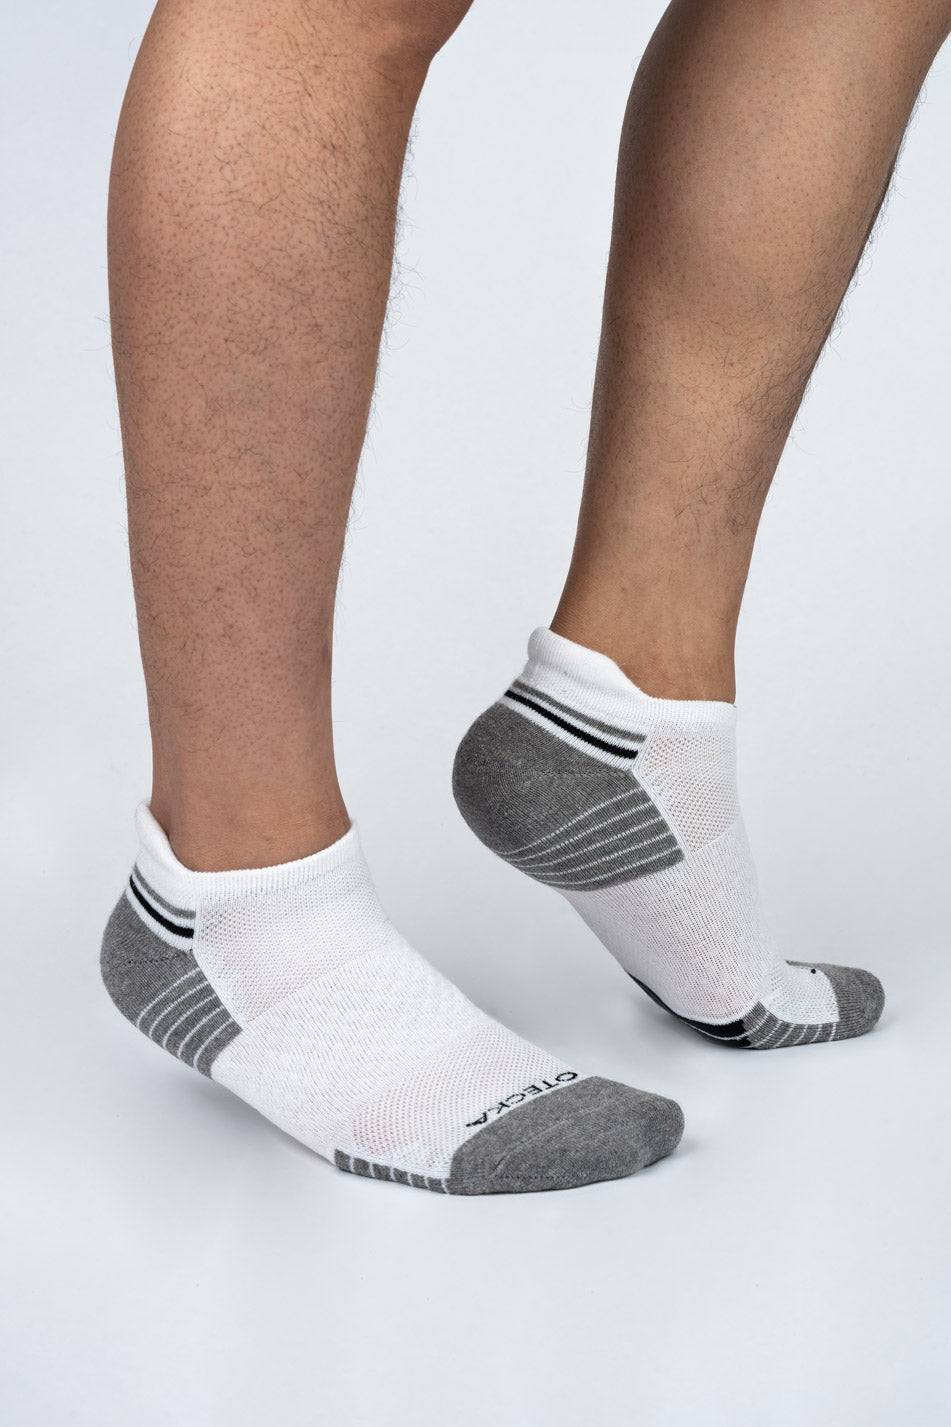 Performance Ankle Socks White Pack of 3